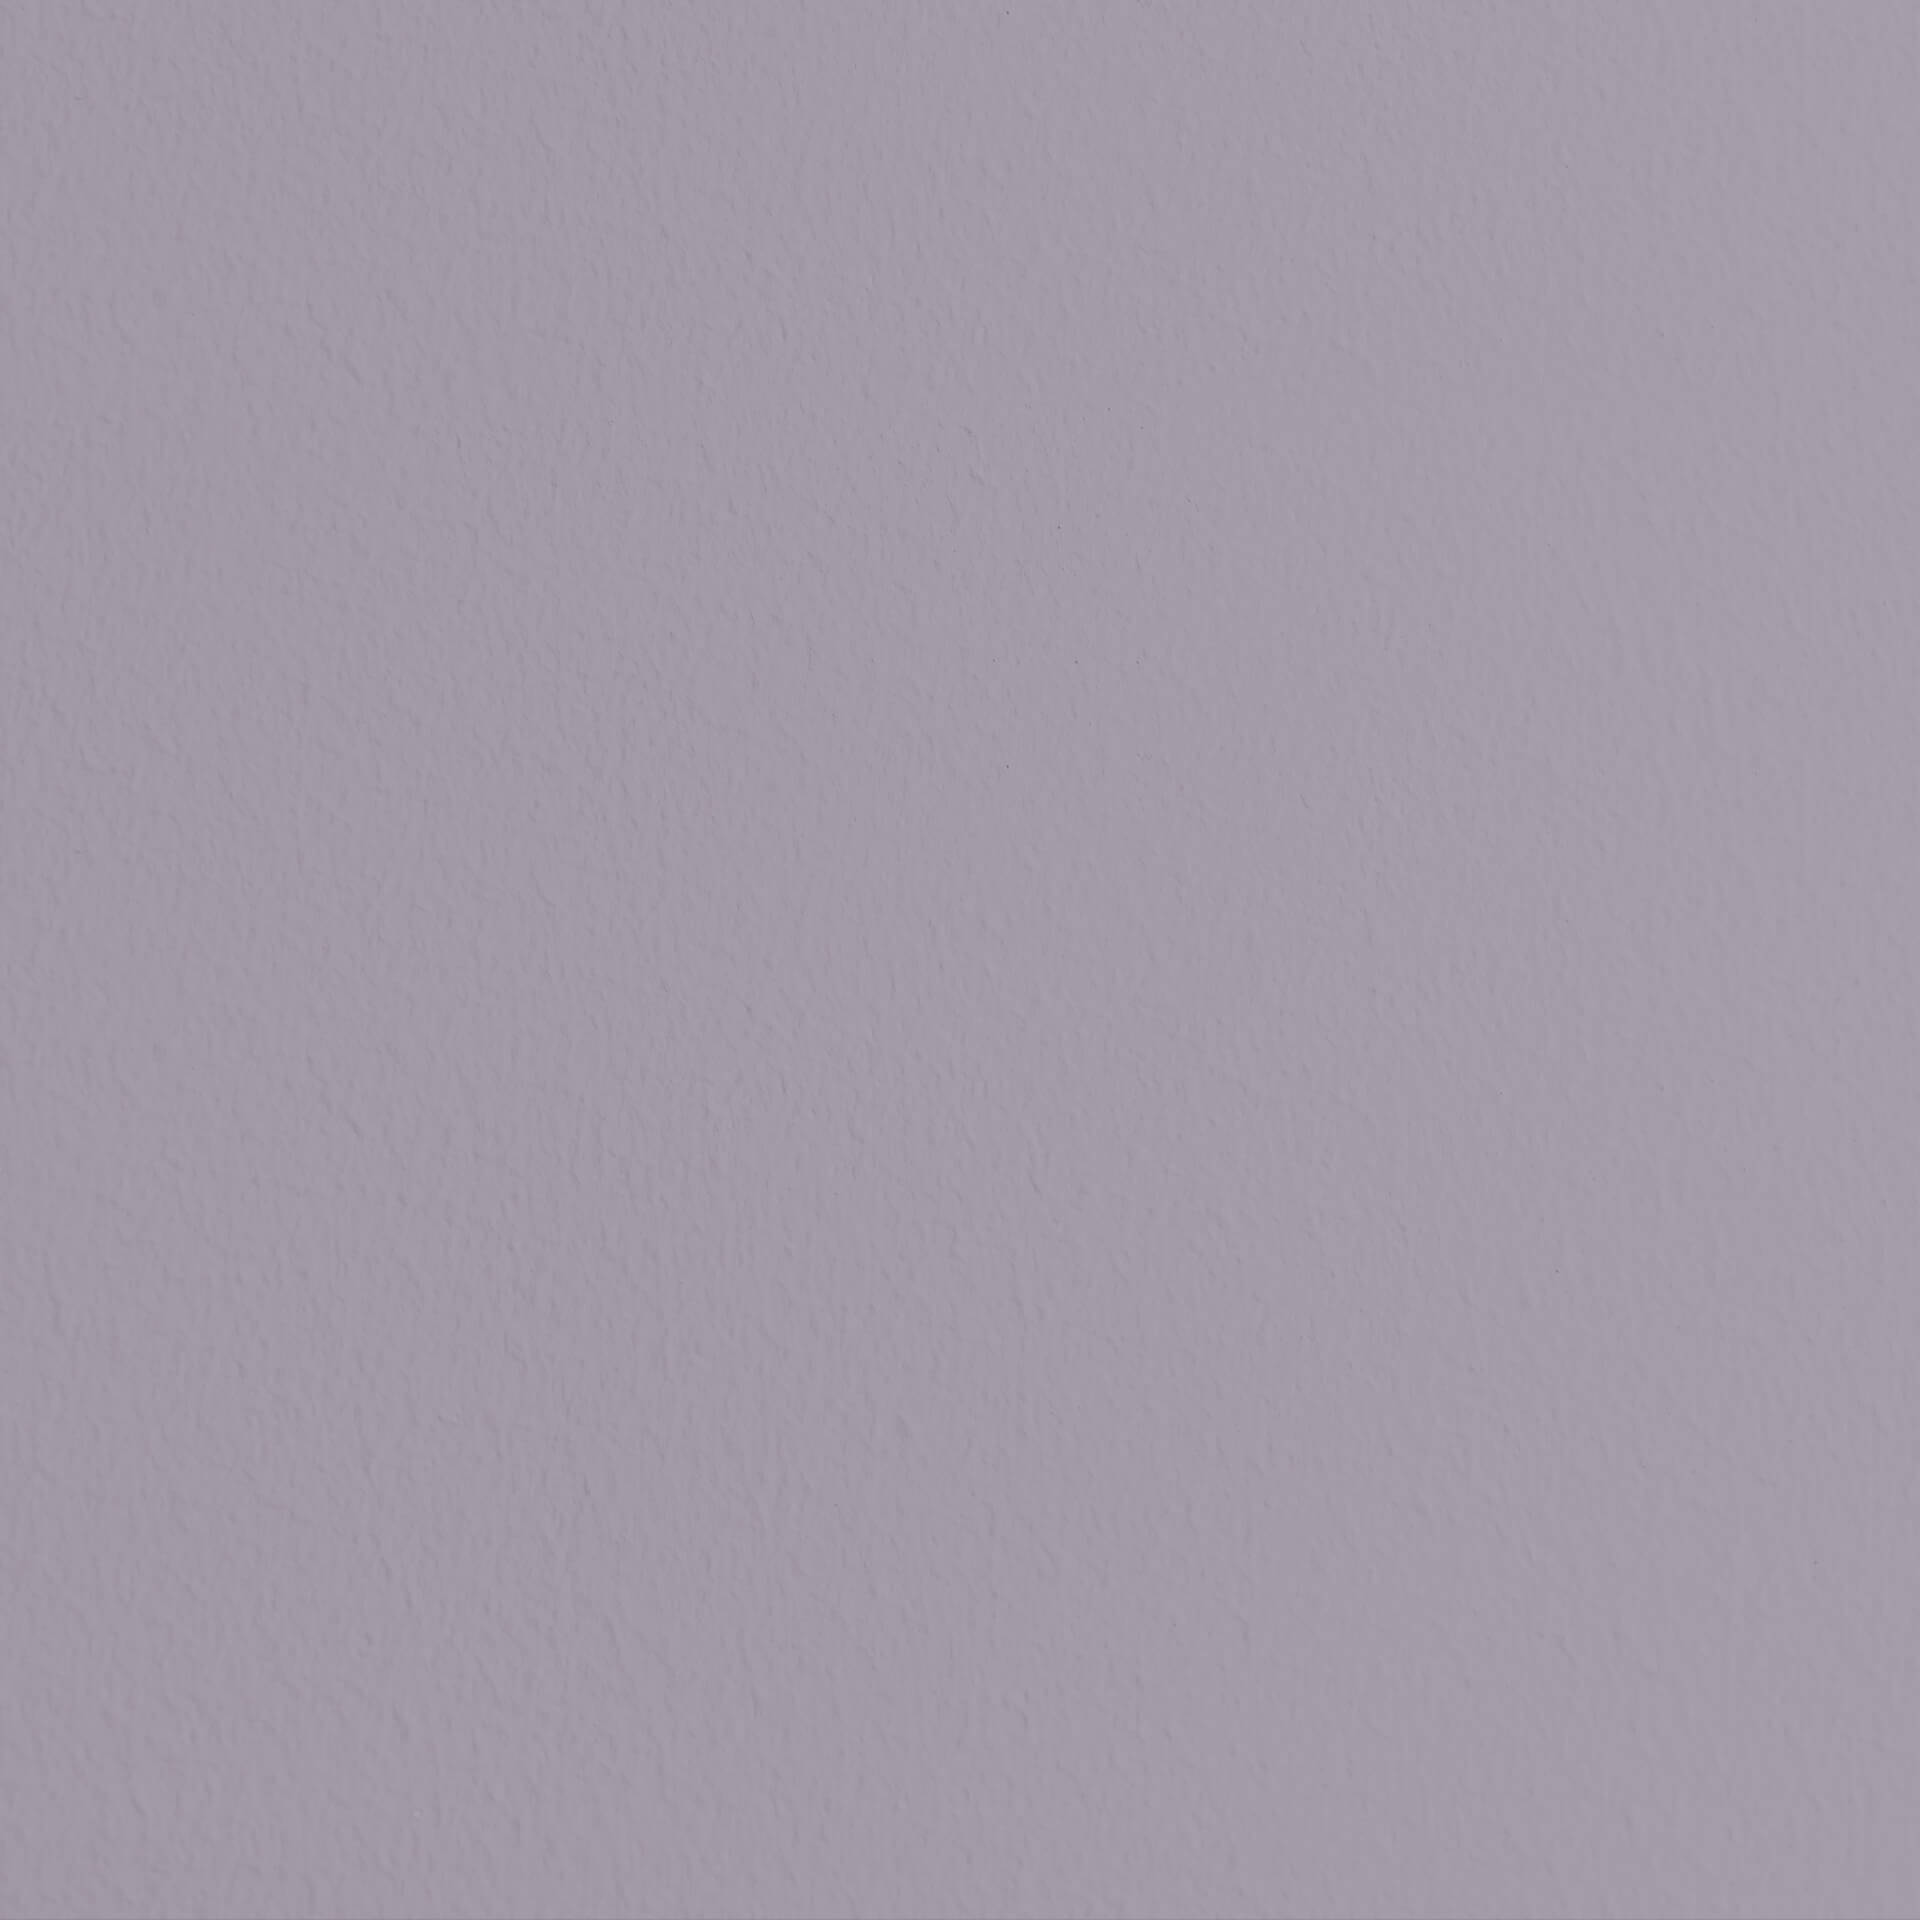 Mylands Lavender Garden No. 30 - Marble Matt Emulsion / Wandfarbe, 1L